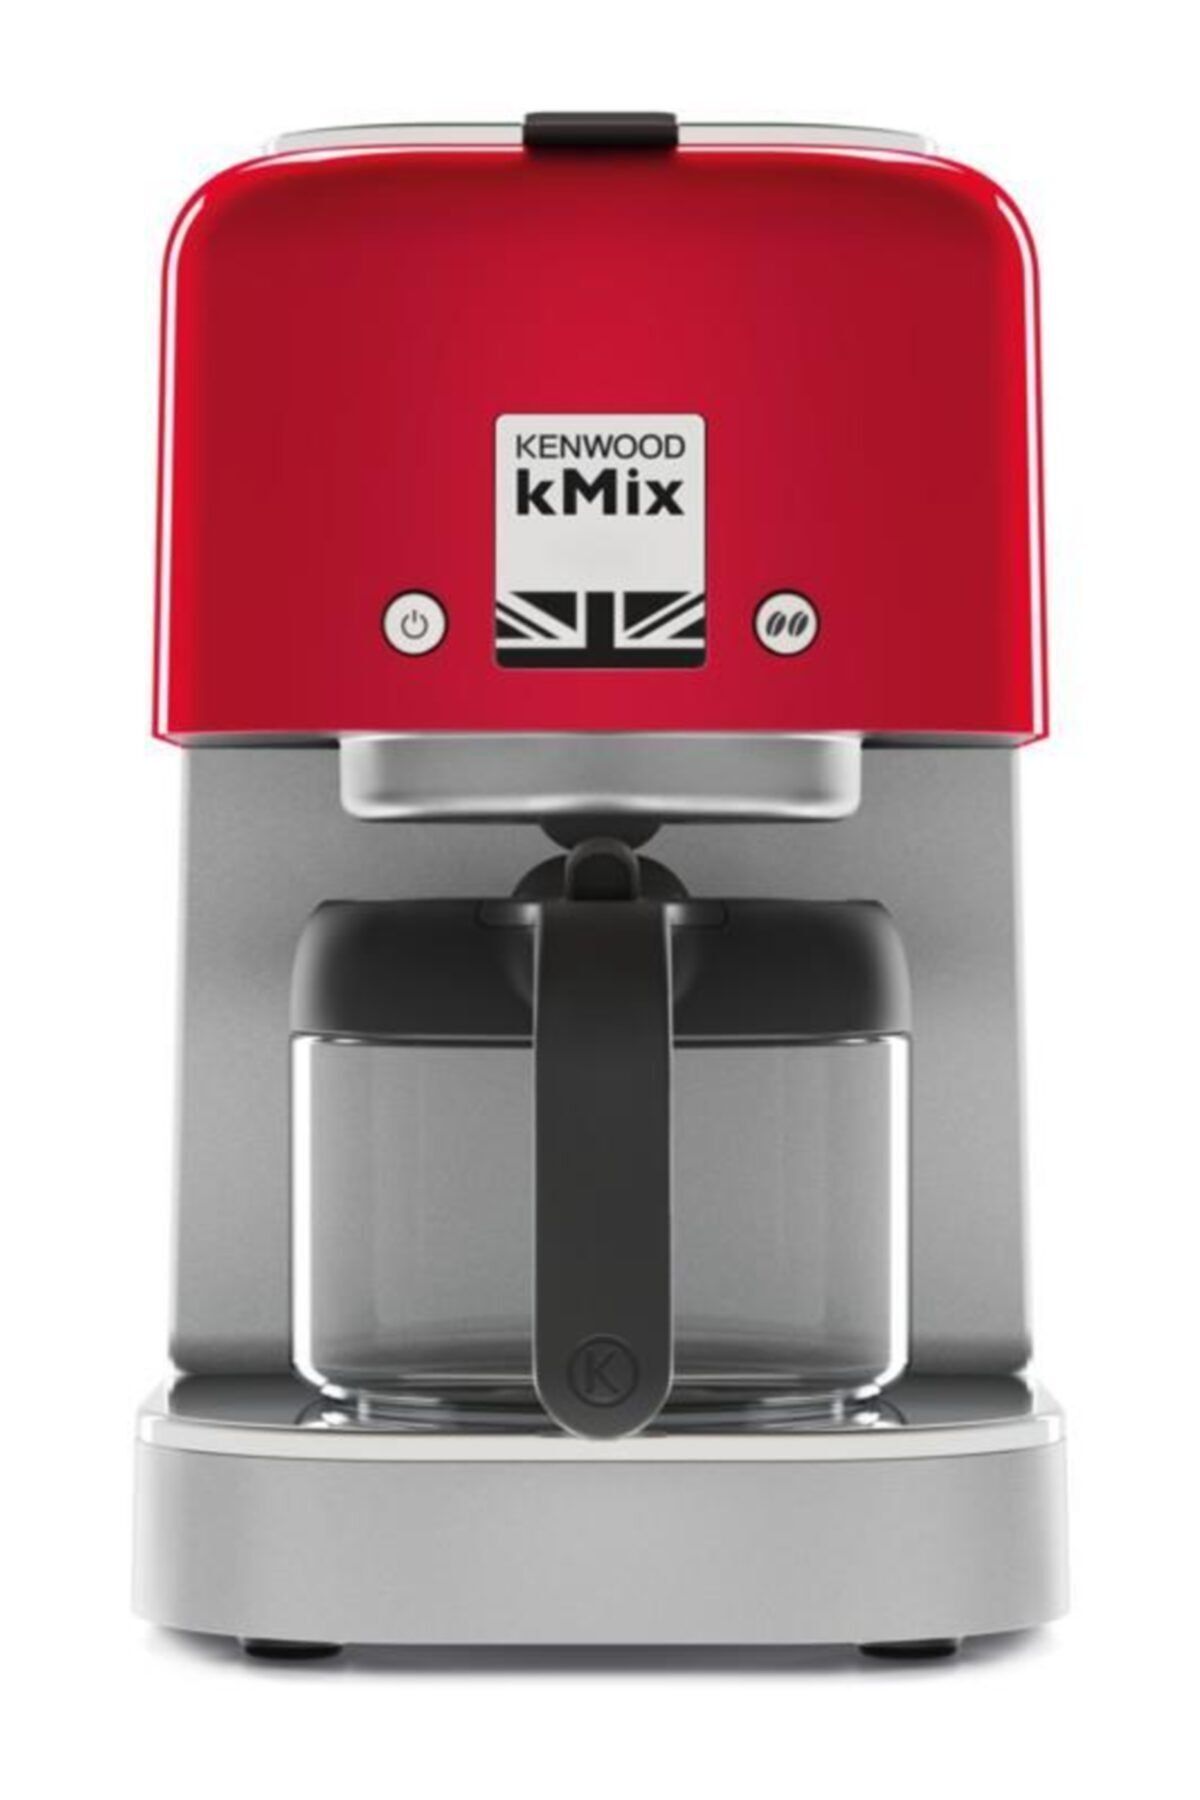 Kenwood Cox750rd Kmix Filtre Kahve Makinası - Kırmızı